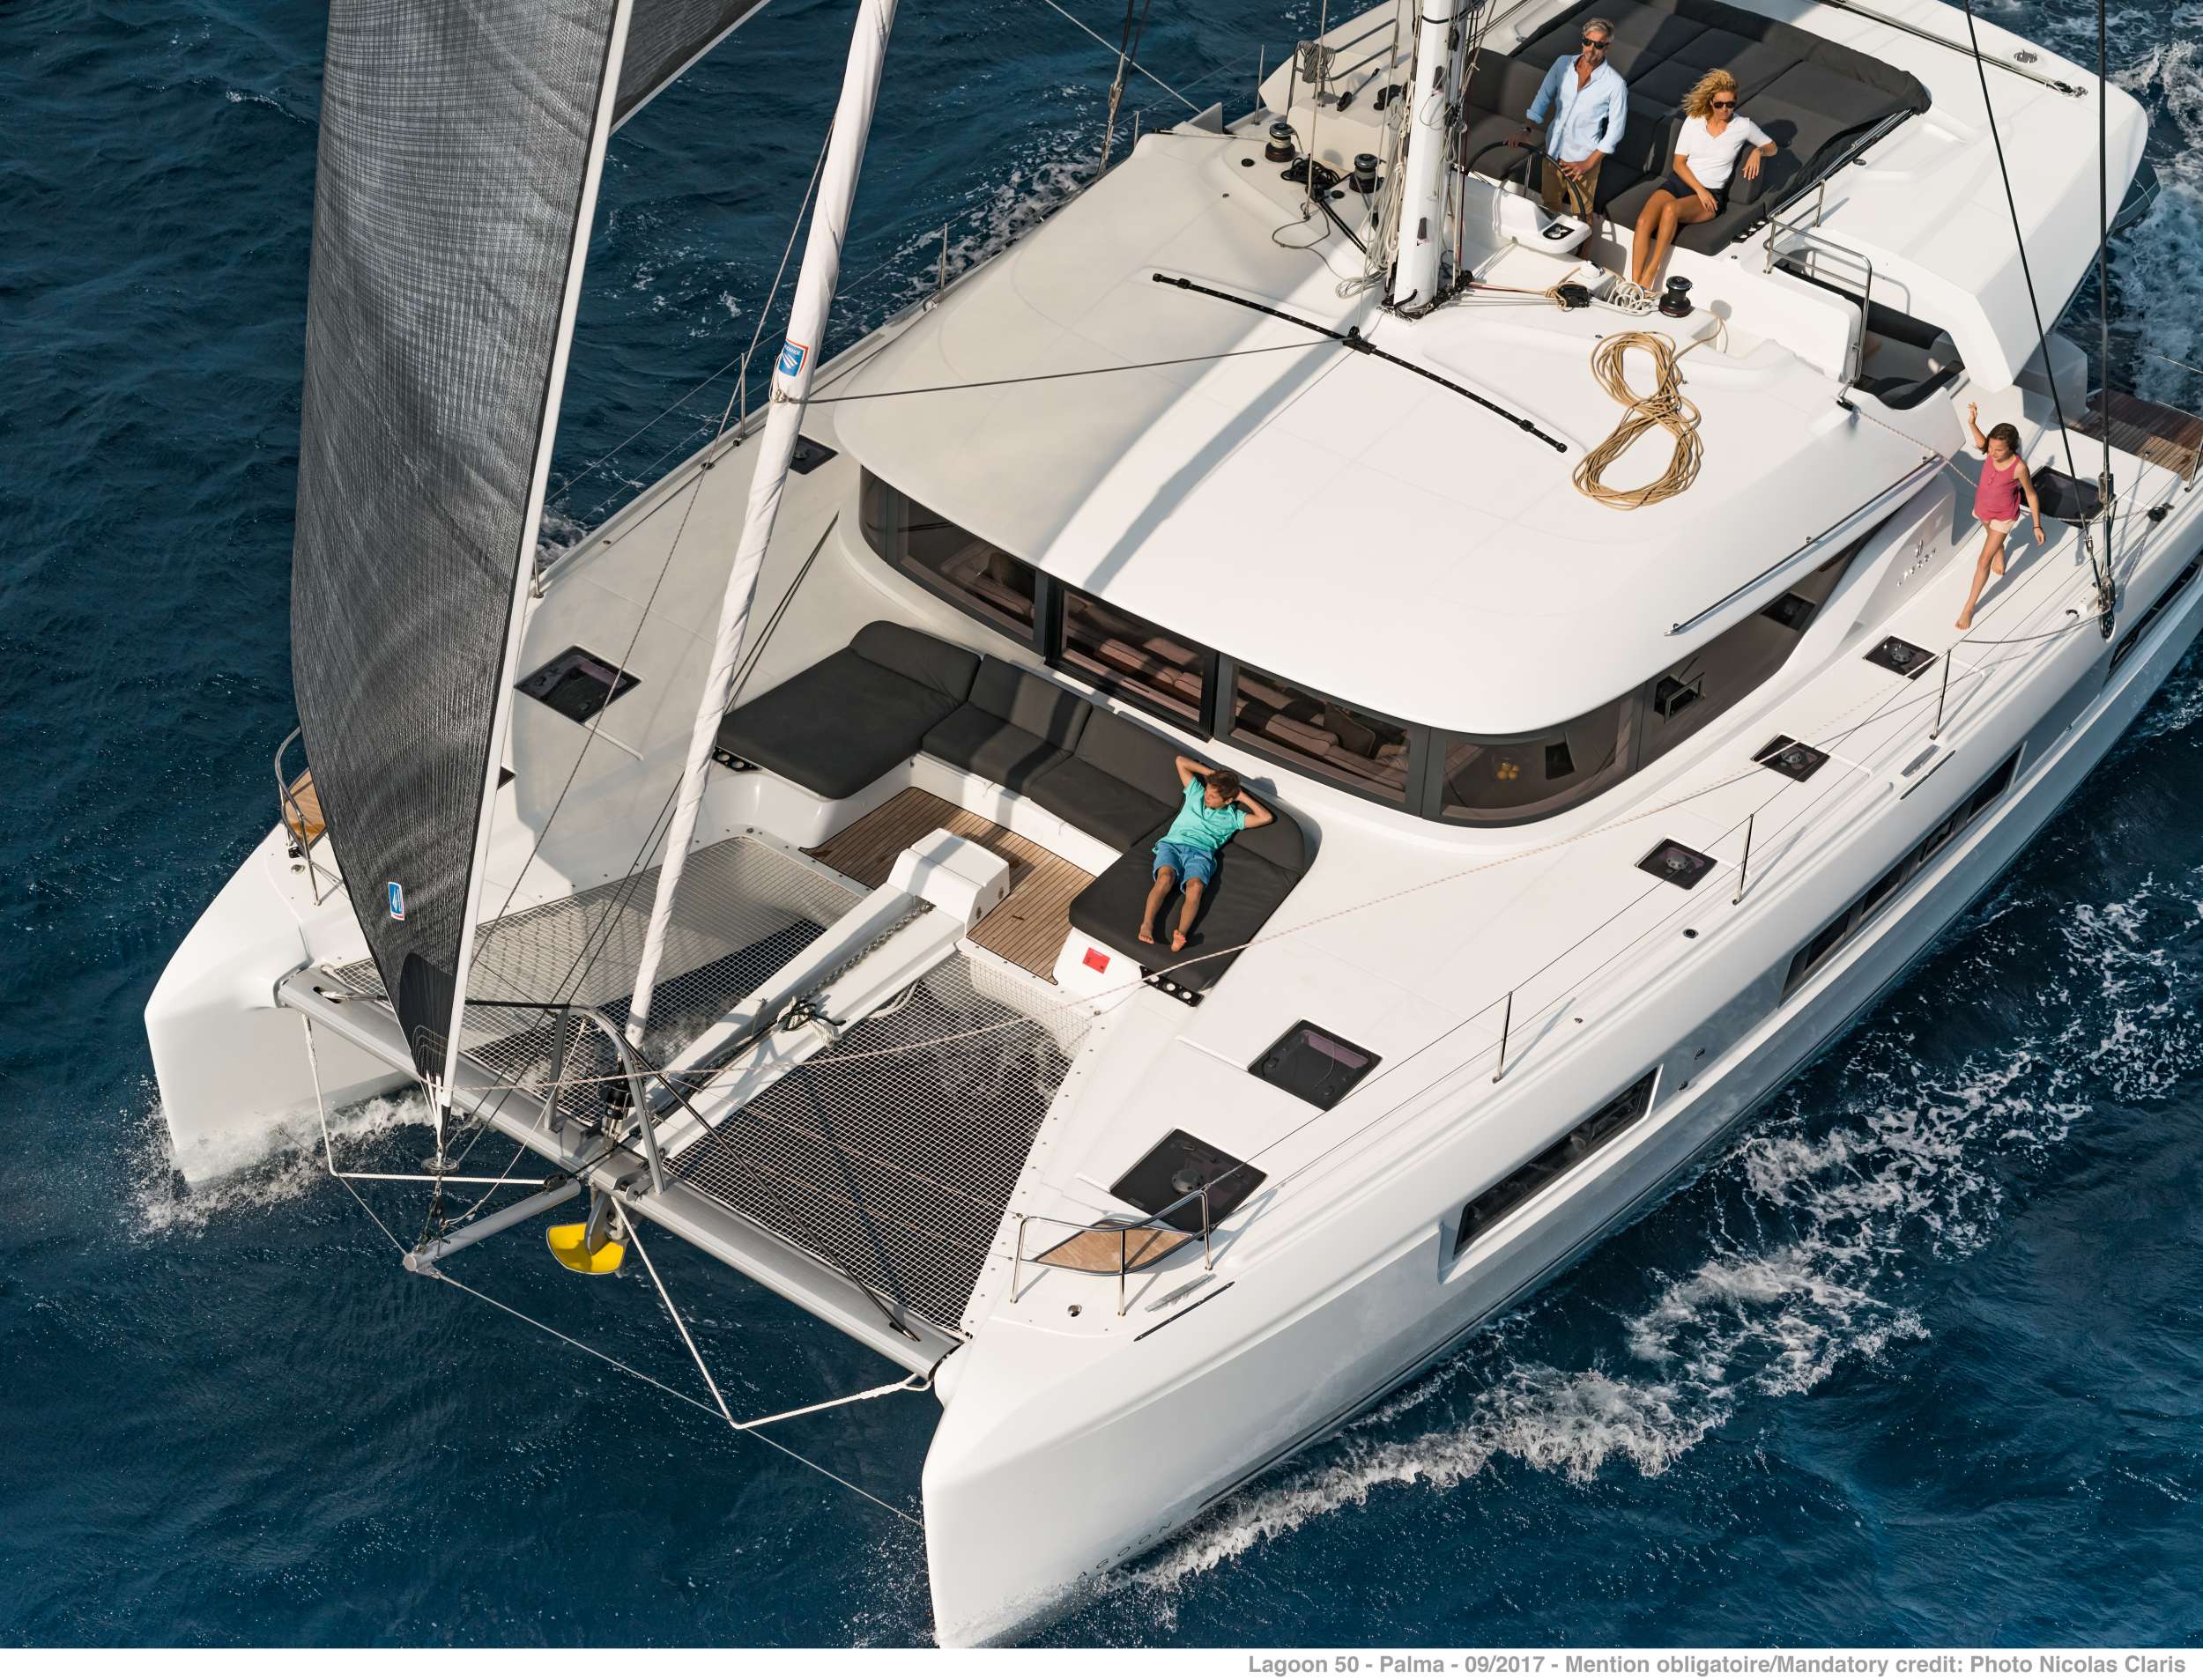 ONEIDA 2 - Yacht Charter Achillio & Boat hire in Greece 6